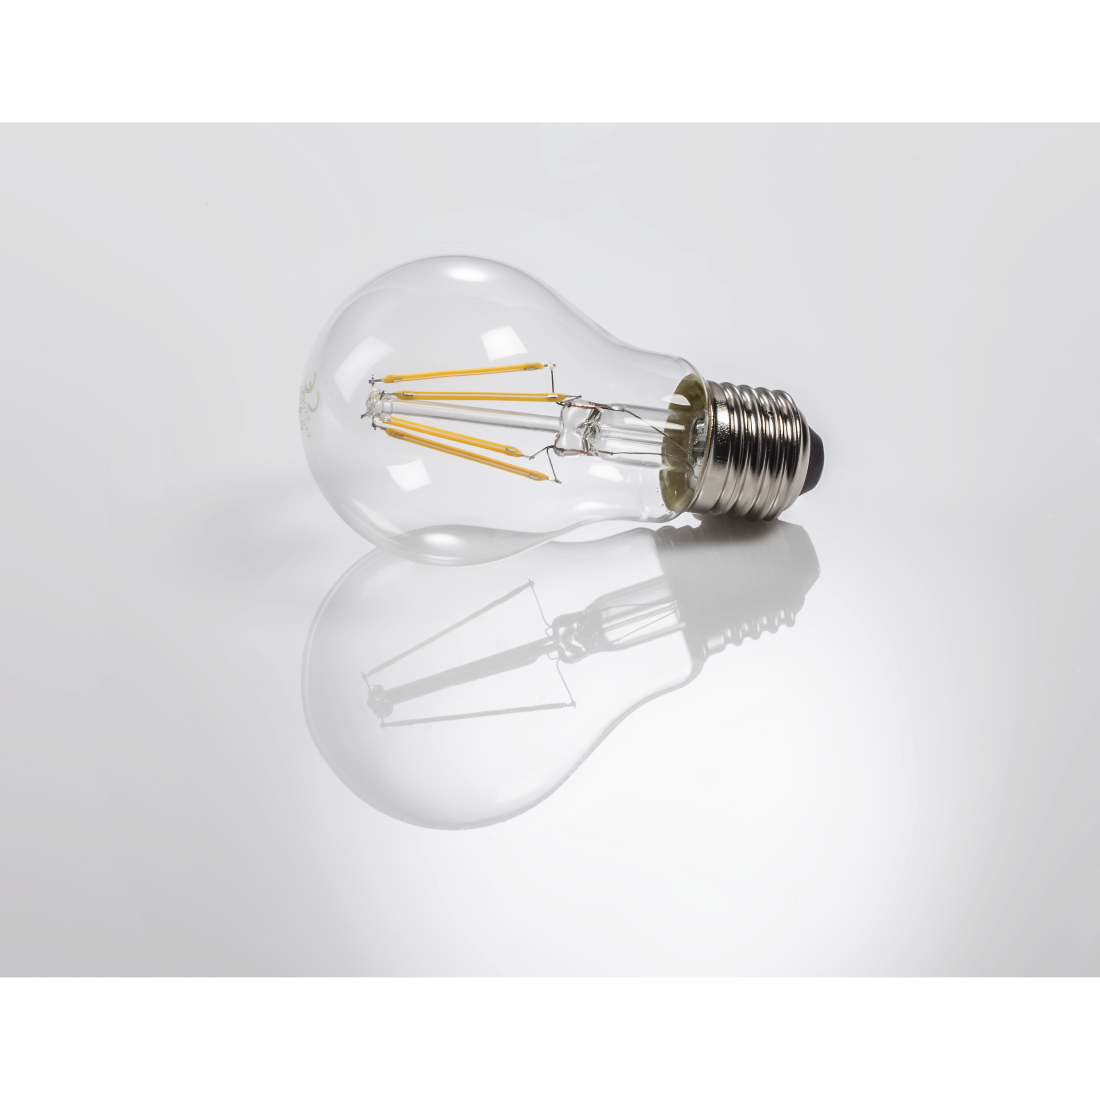 abx3 Druckfähige Abbildung 3 - Xavax, LED-Filament, E27, 806lm ersetzt 60W, Glühlampe, Warmweiß, 2 Stück